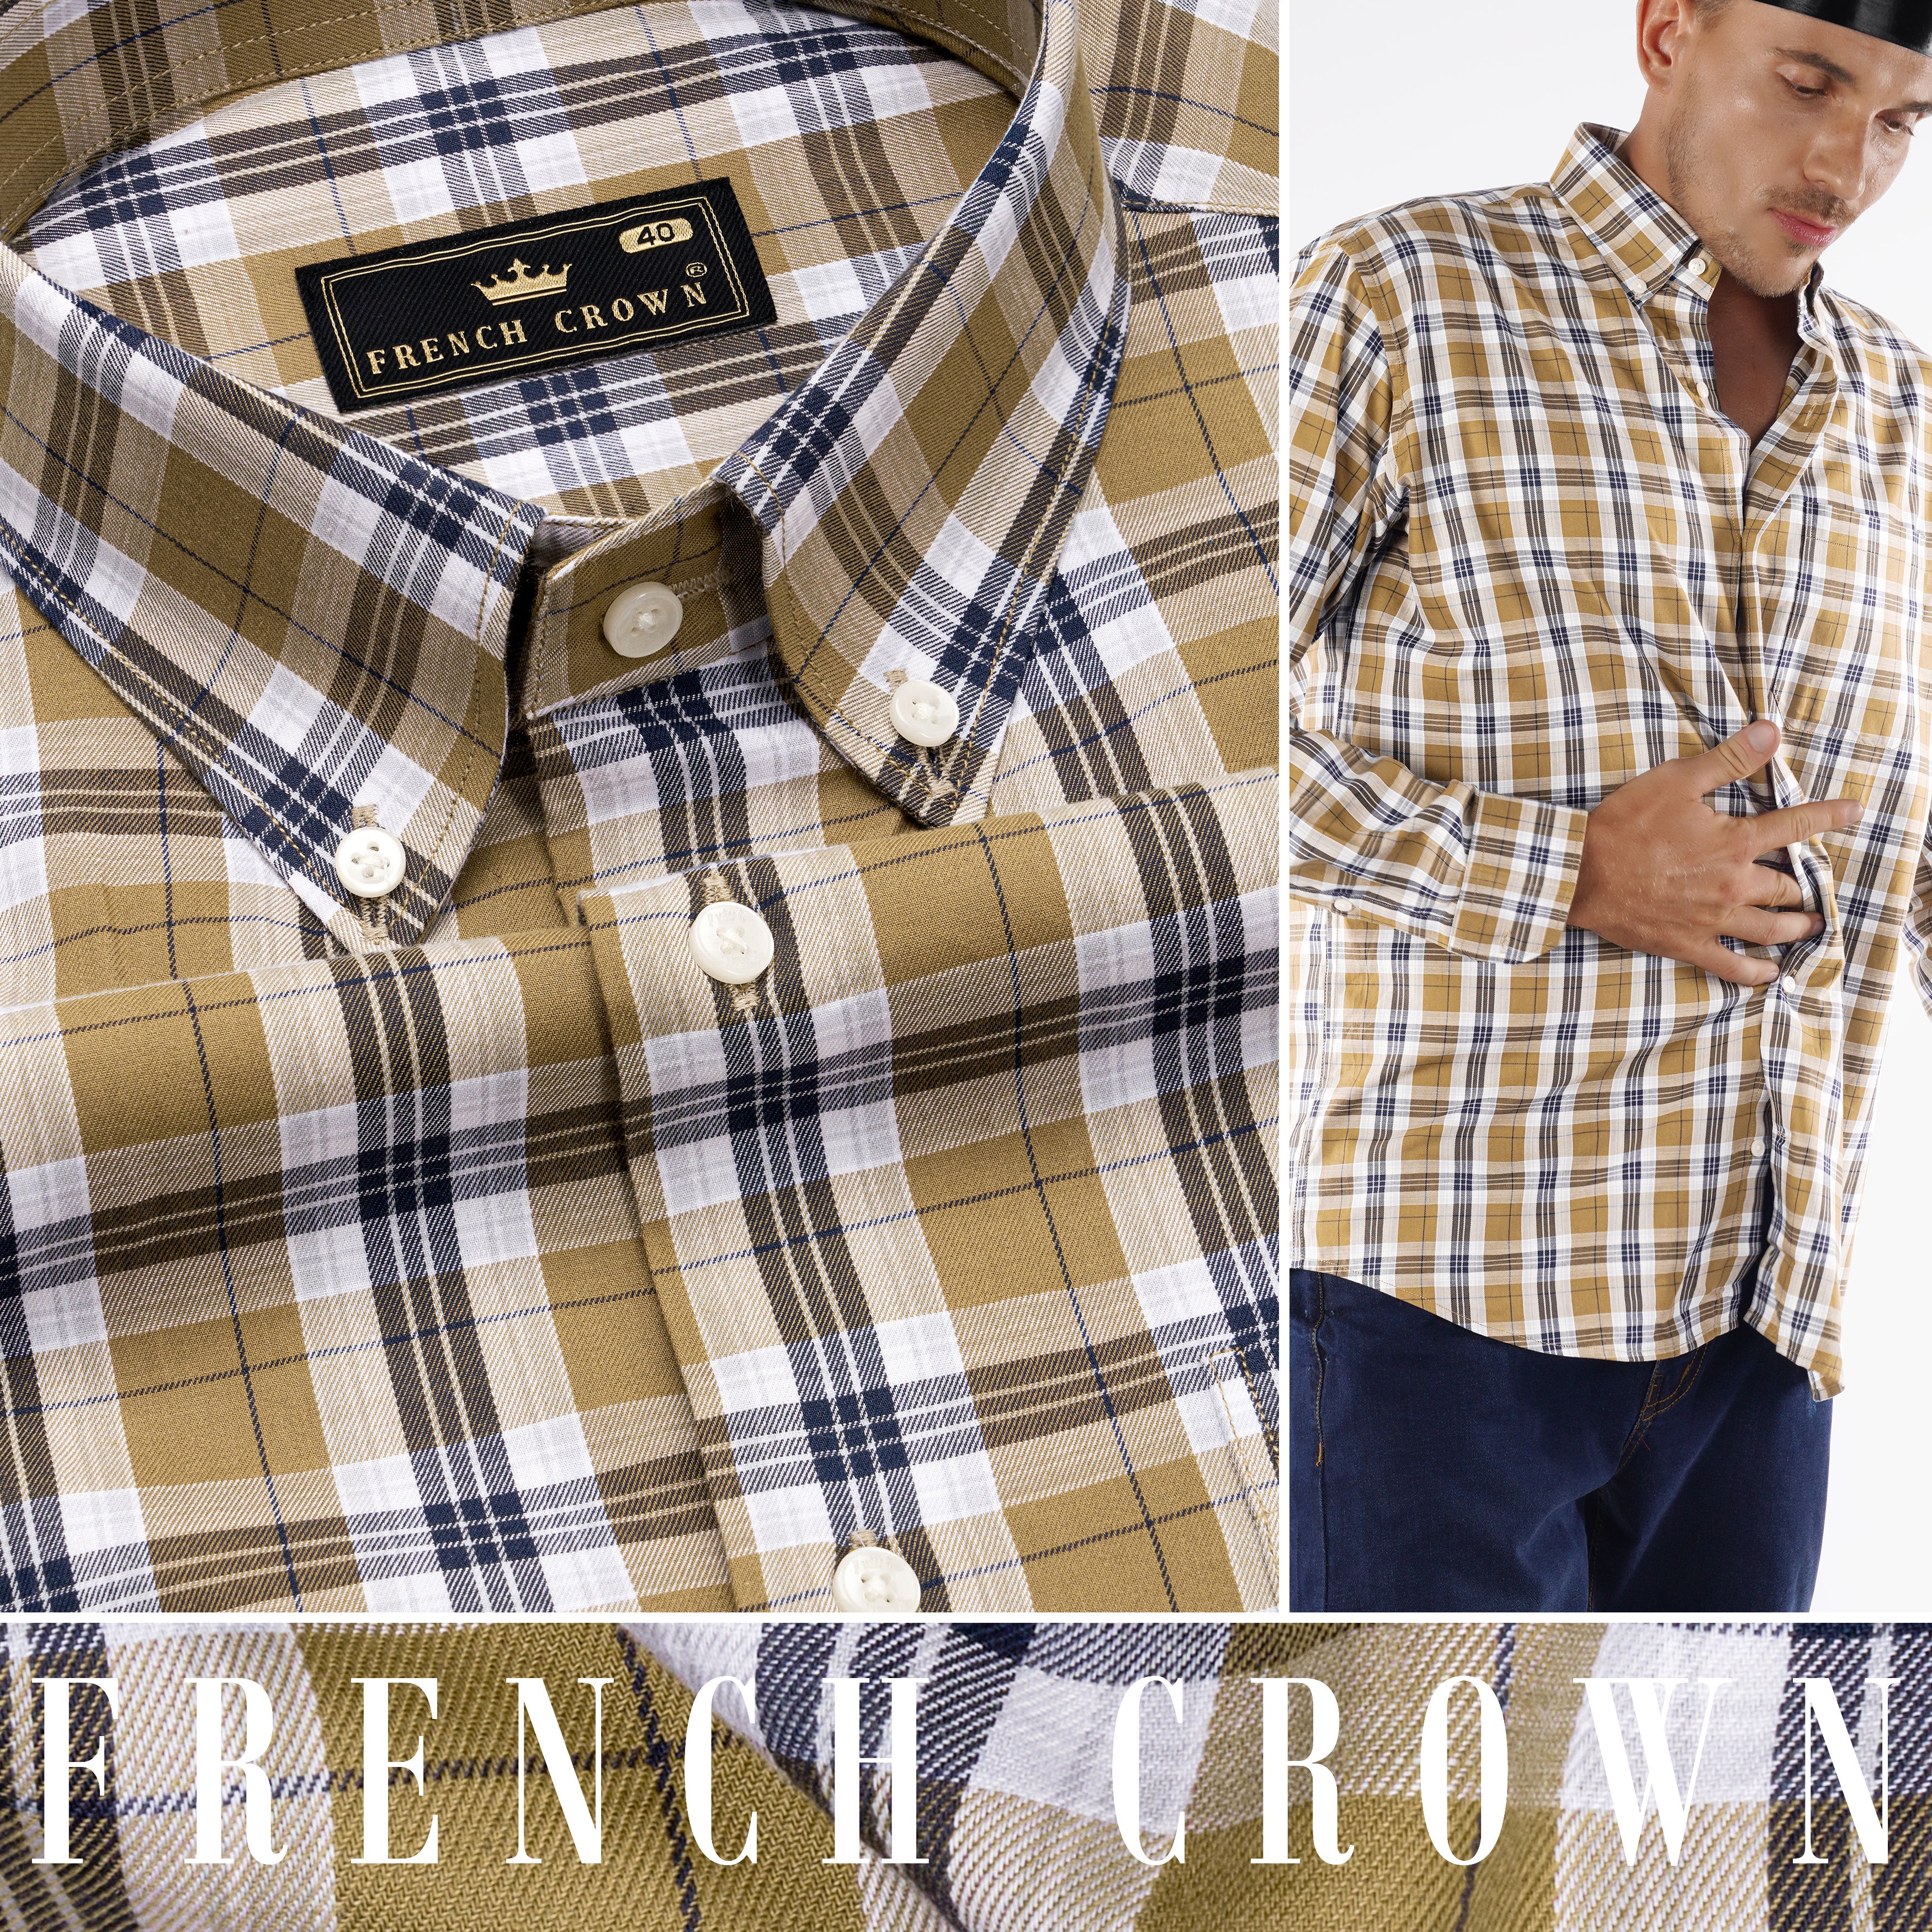 Driftwood Brown and Haiti Blue Twill Checkered Premium Cotton Shirt